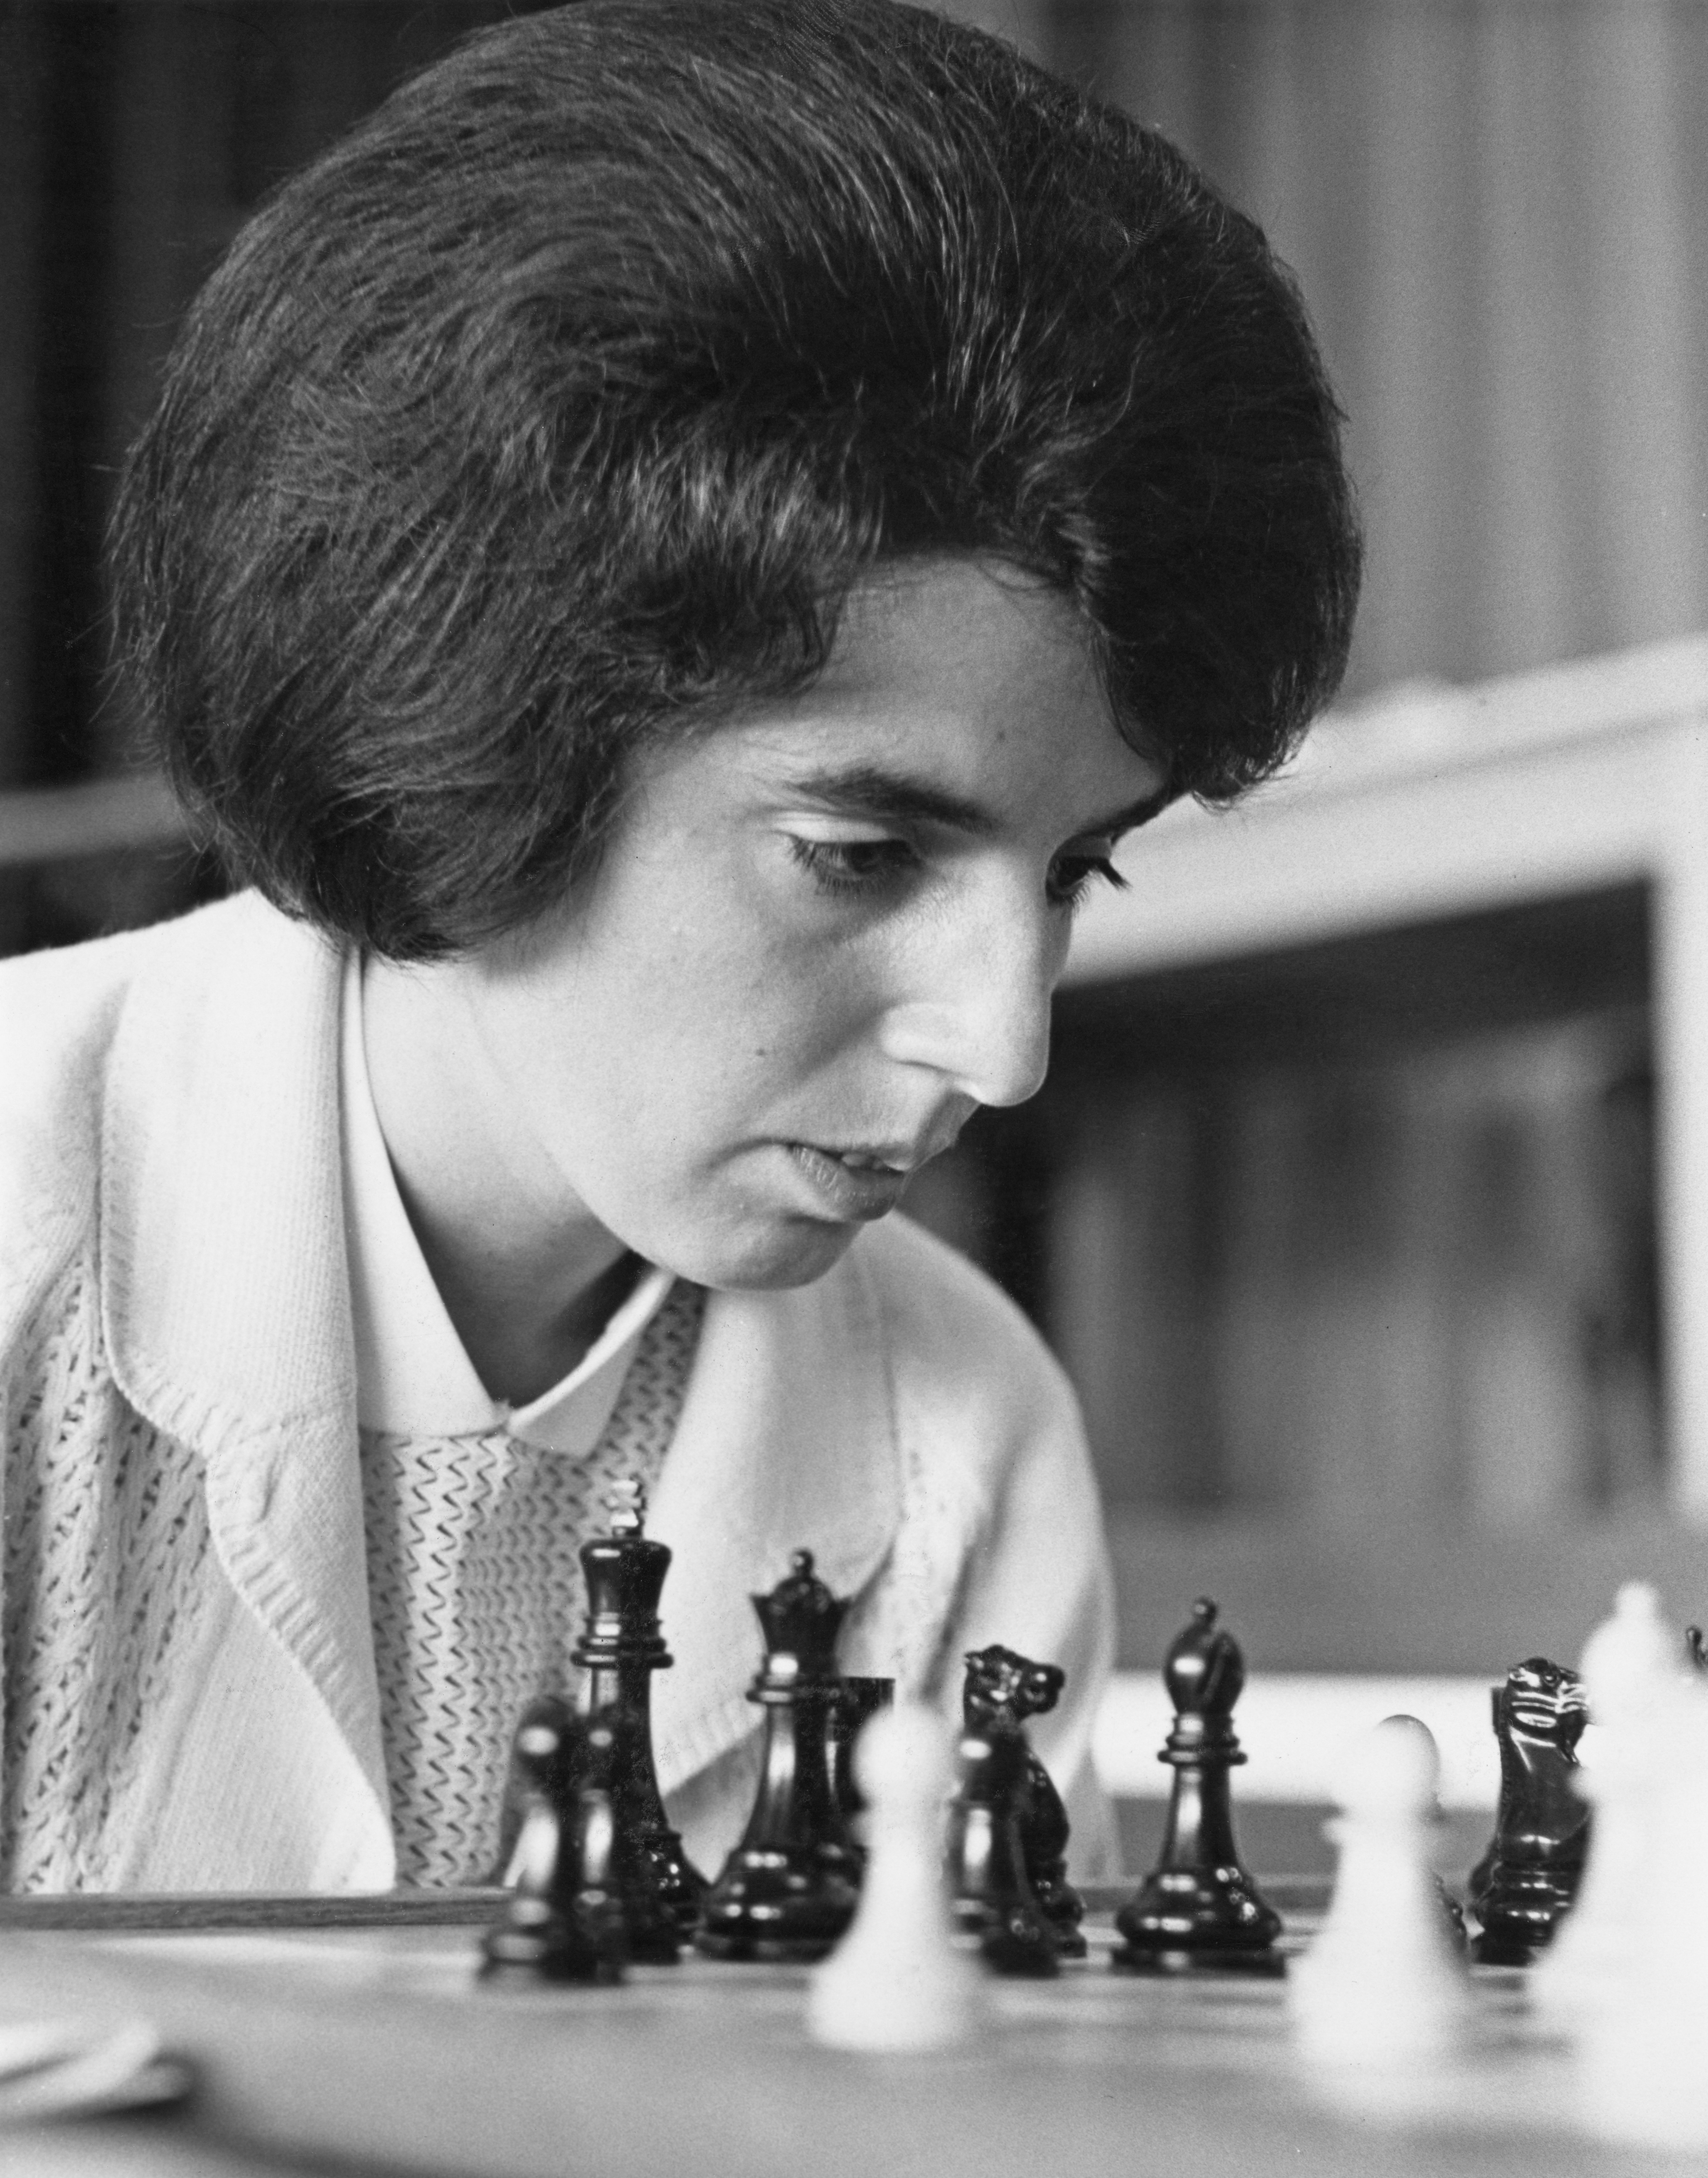 Nona Gaprindashvili - The Real Queen of Chess - Georgia Today